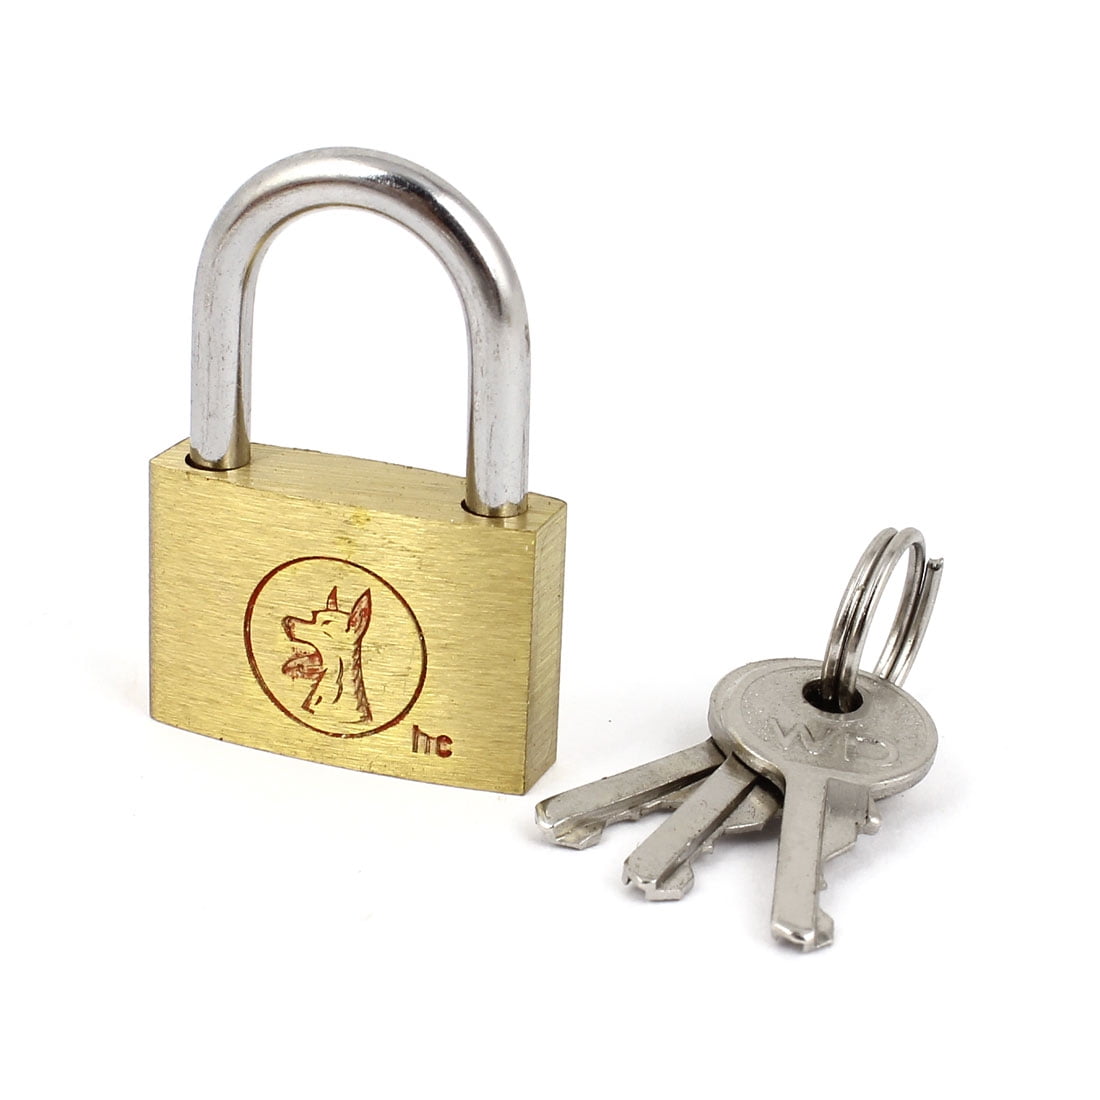 BRIGHT PINK YALE PADLOCK 32MM School Gym Locker Luggage Keyed Security Lock UK 